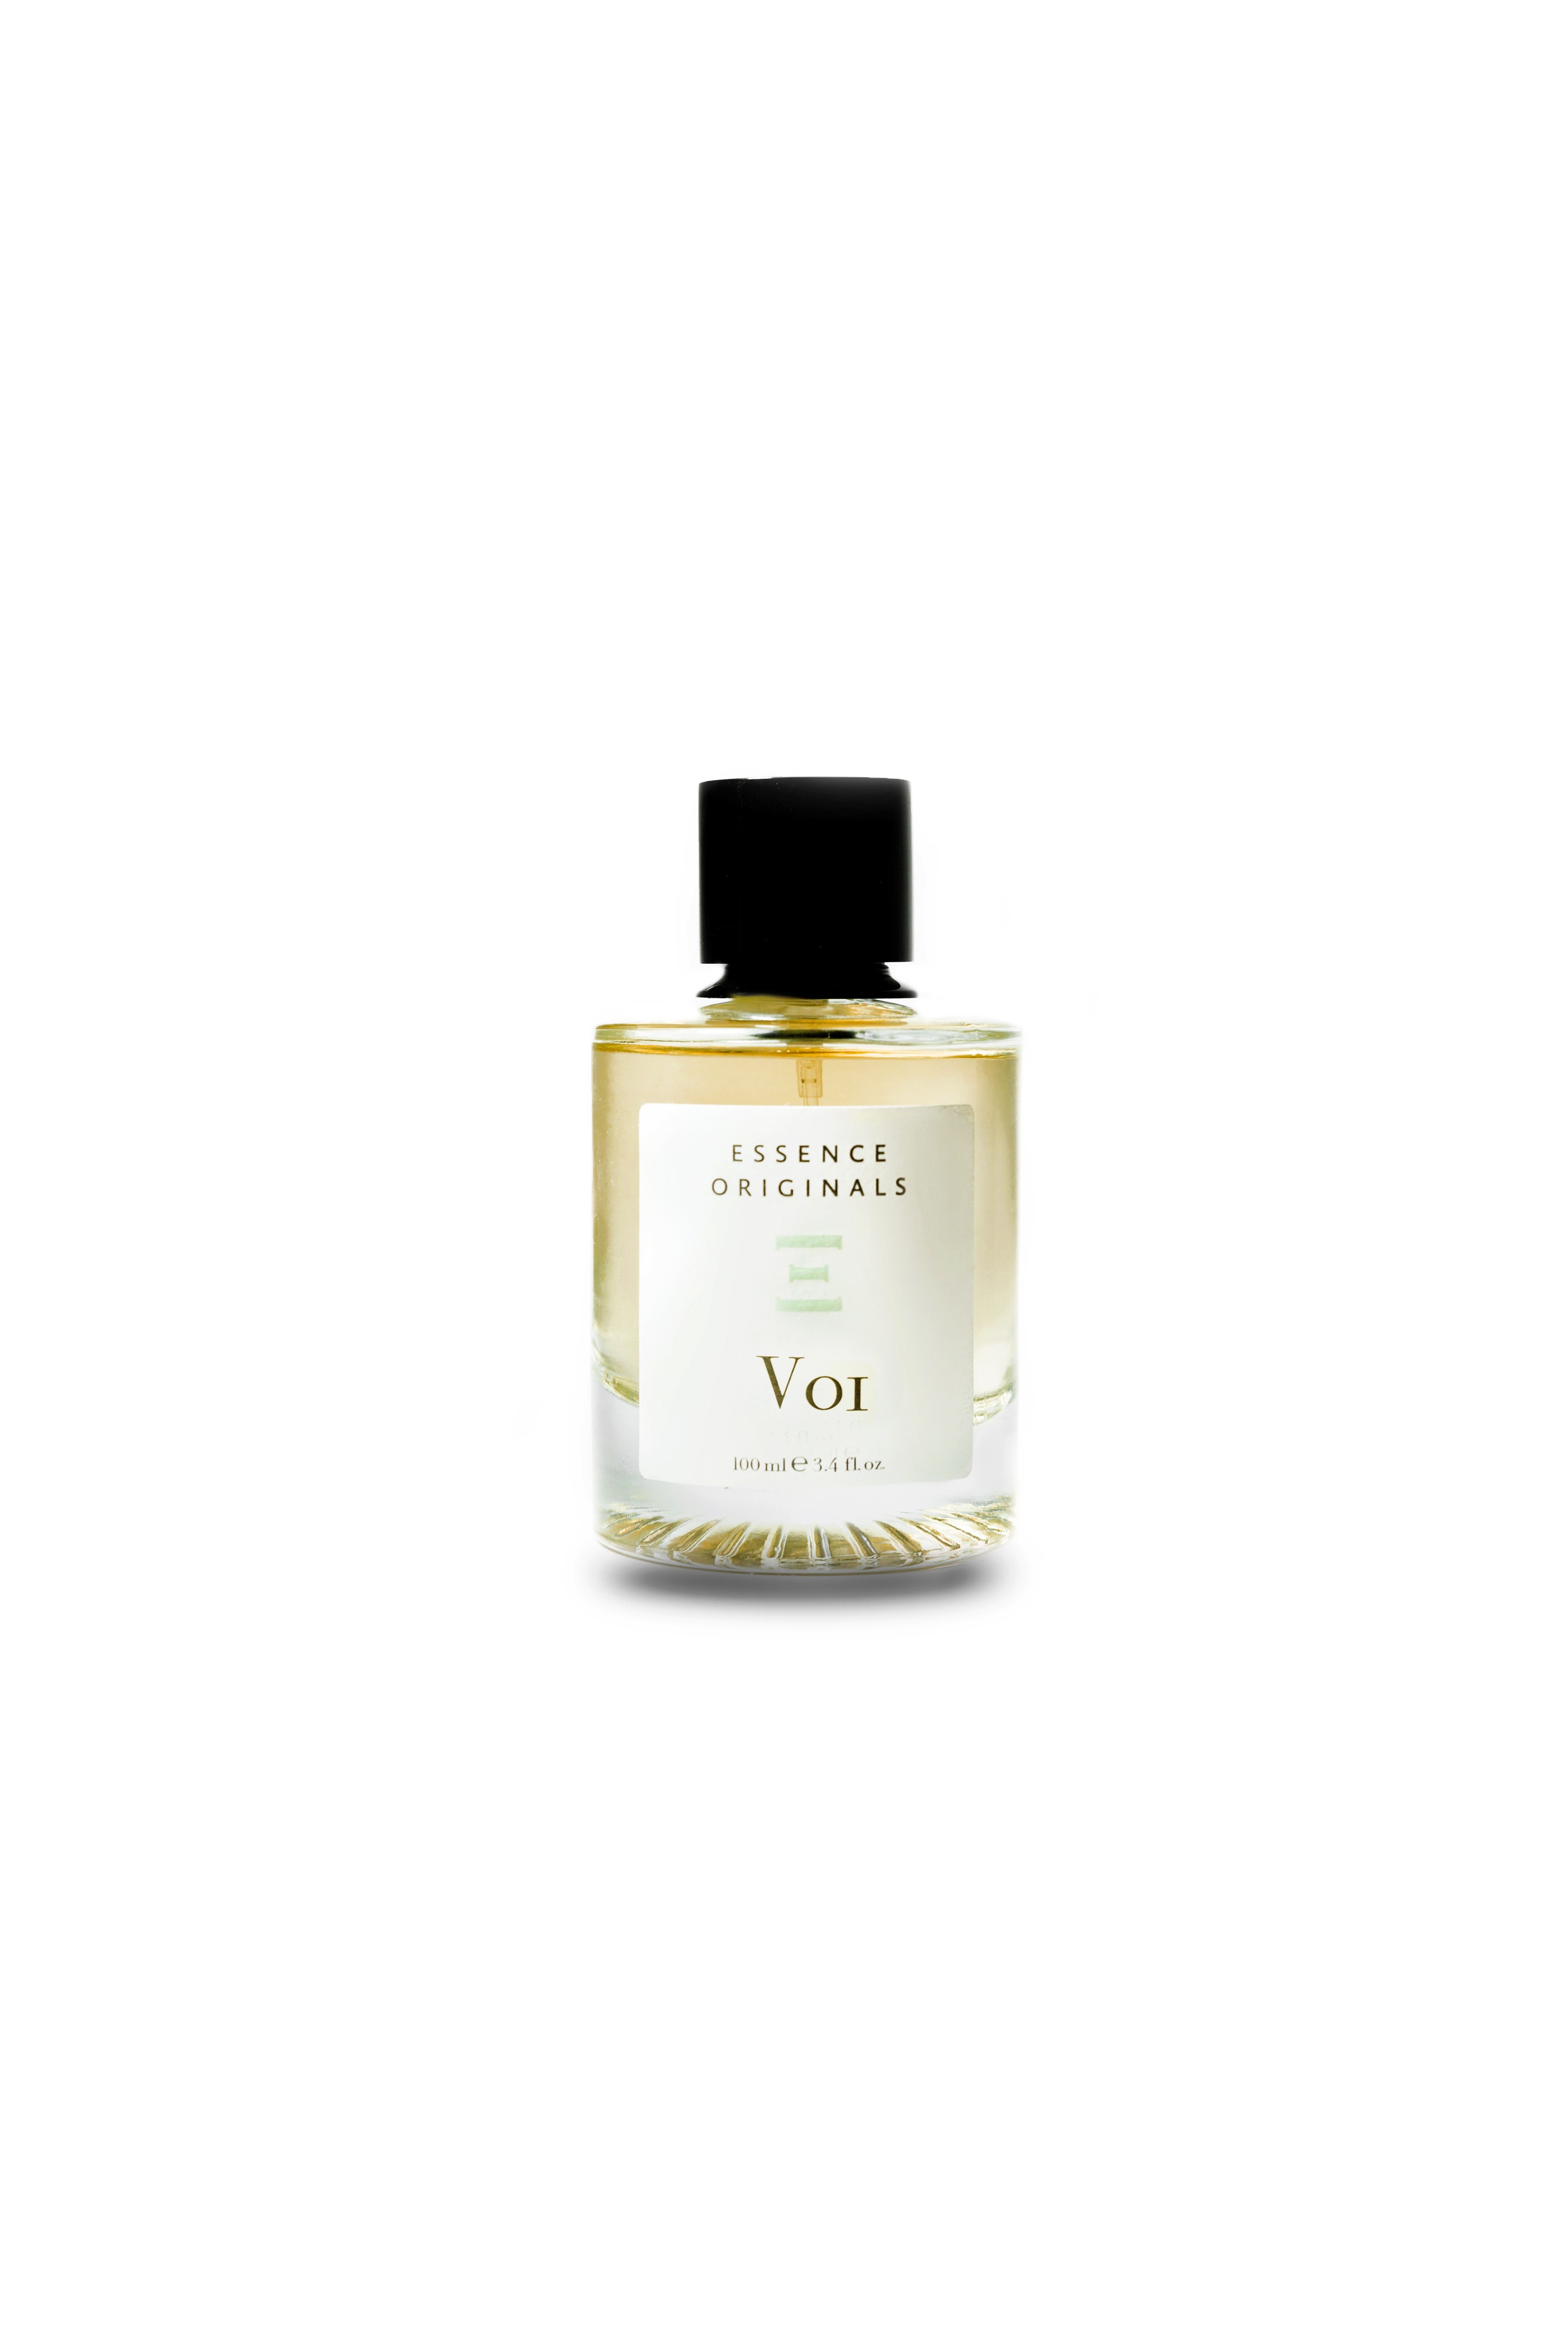 100 Ml Essence Originals Eau De Parfum V01 /Woman main variant image